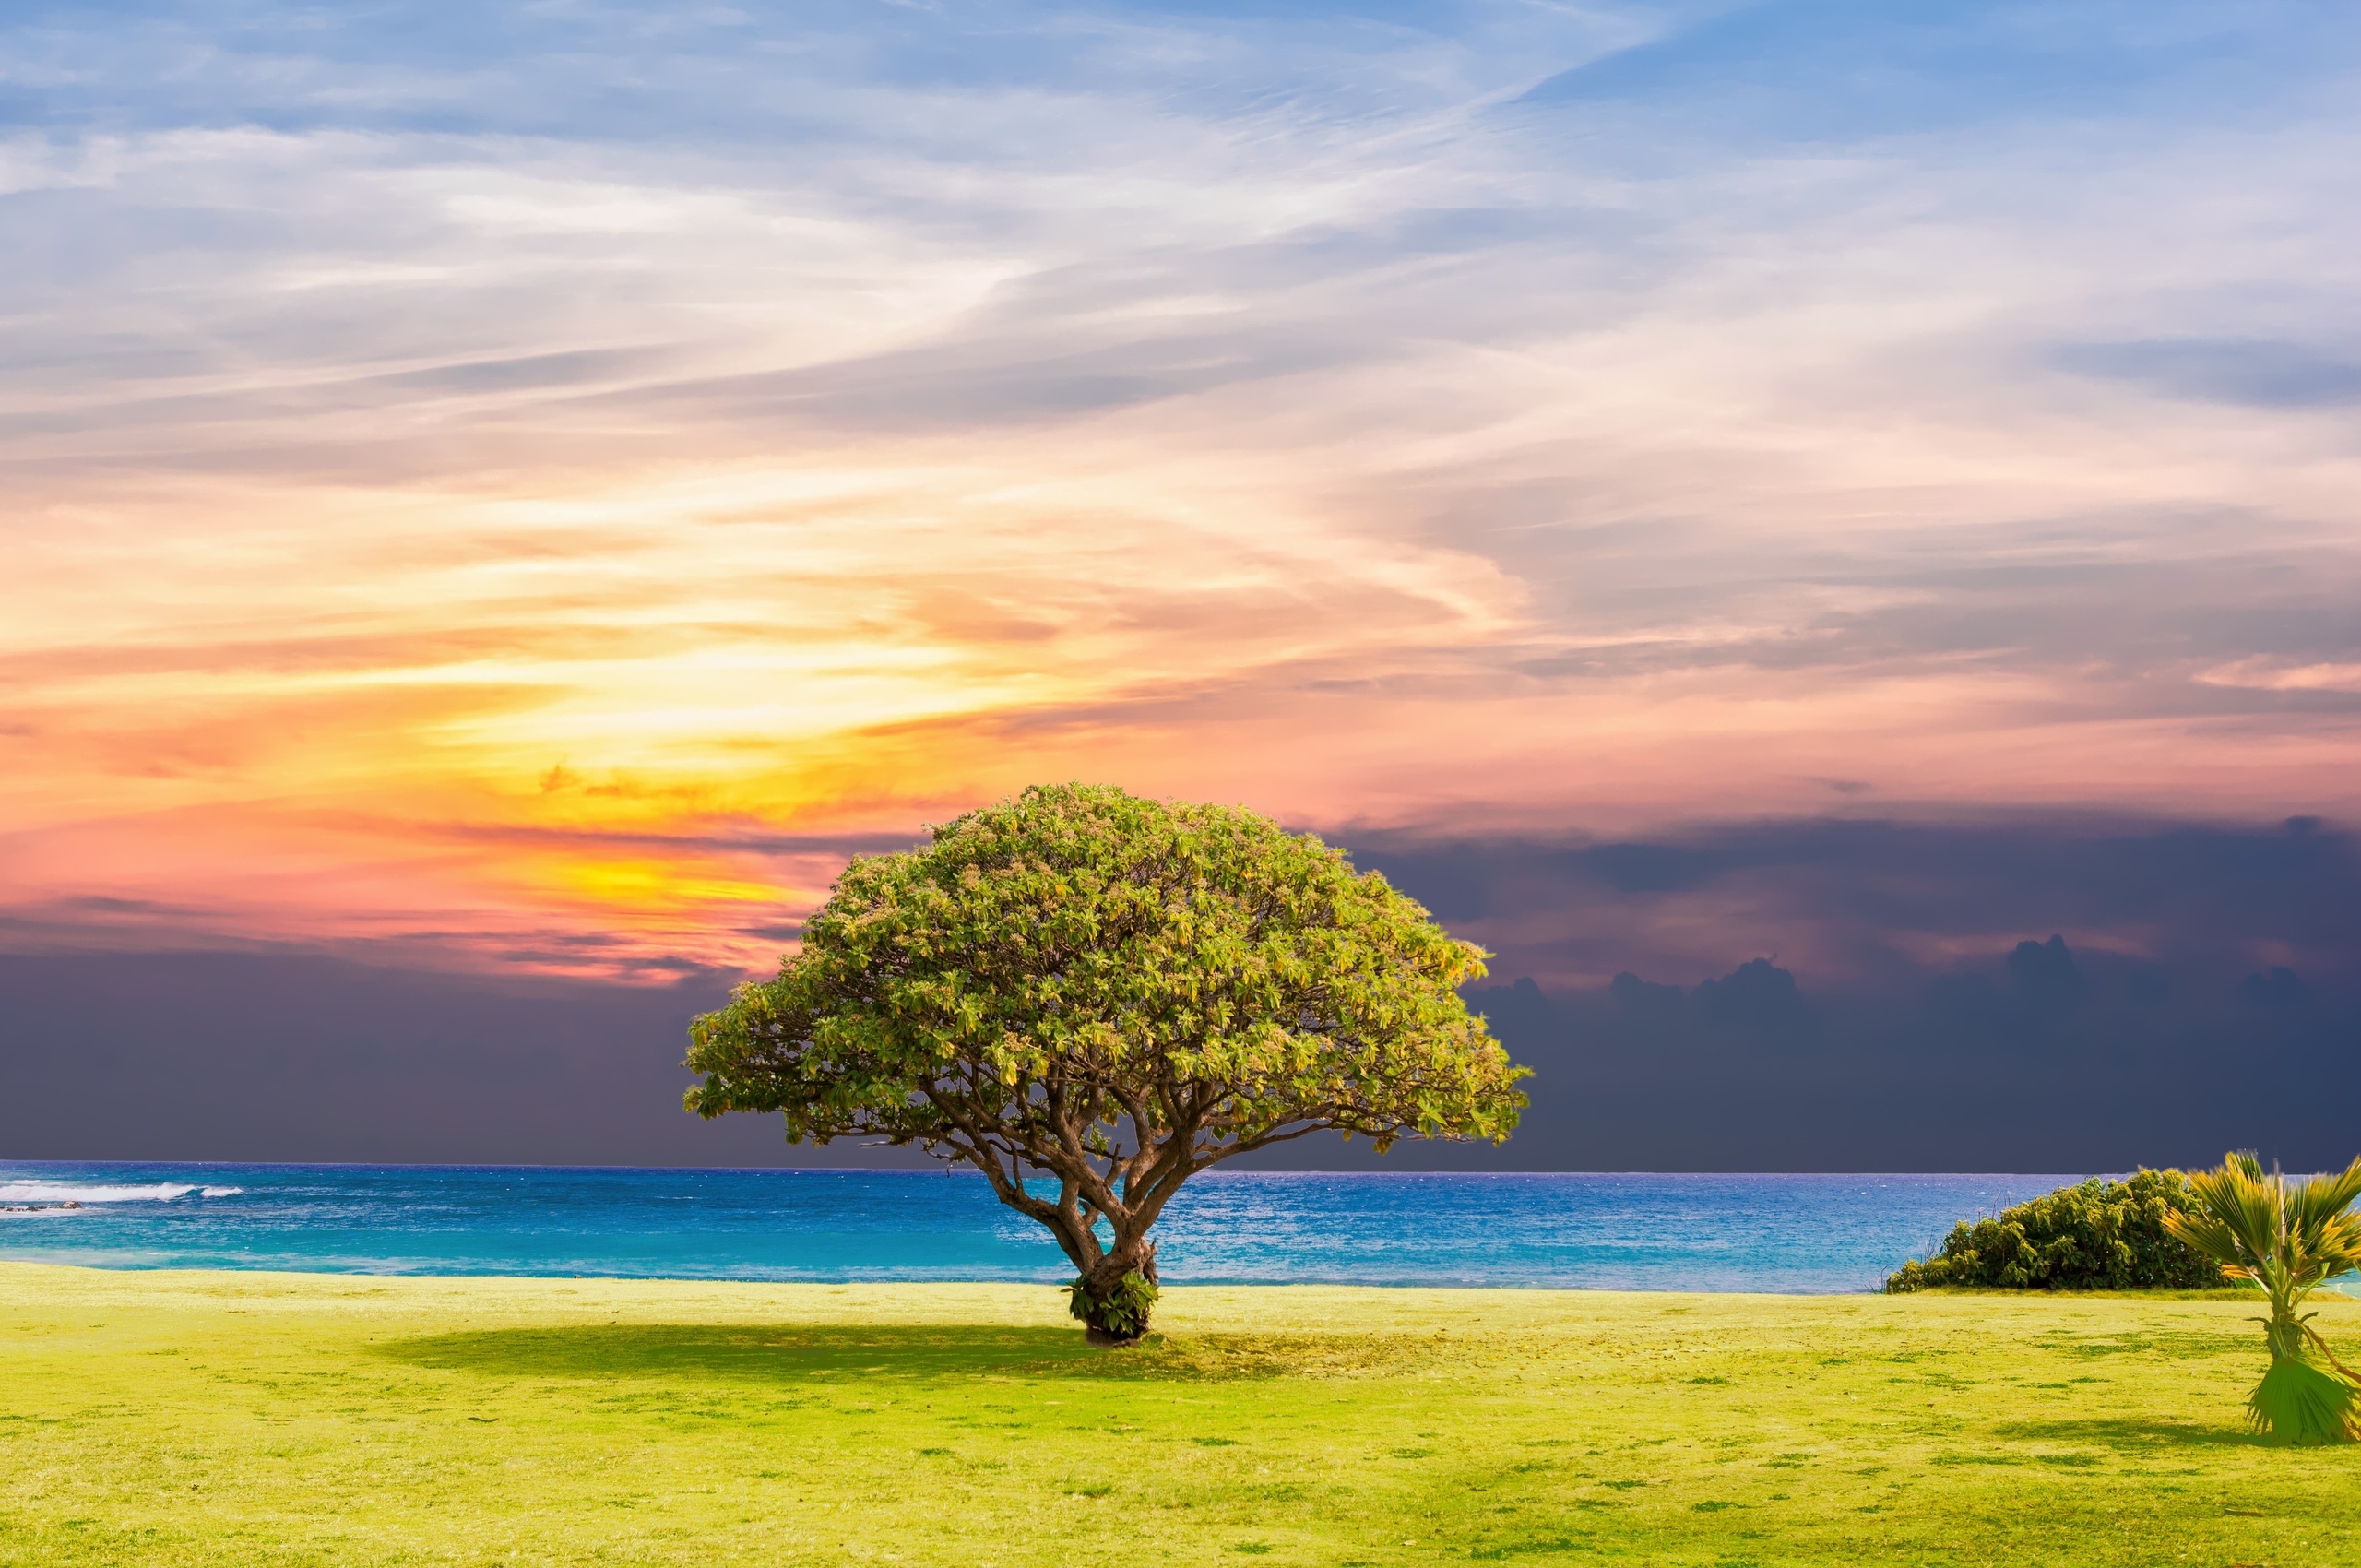 Ocean Summer Tree Landscape 5k Chromebook Pixel HD 4k Wallpaper, Image, Background, Photo and Picture